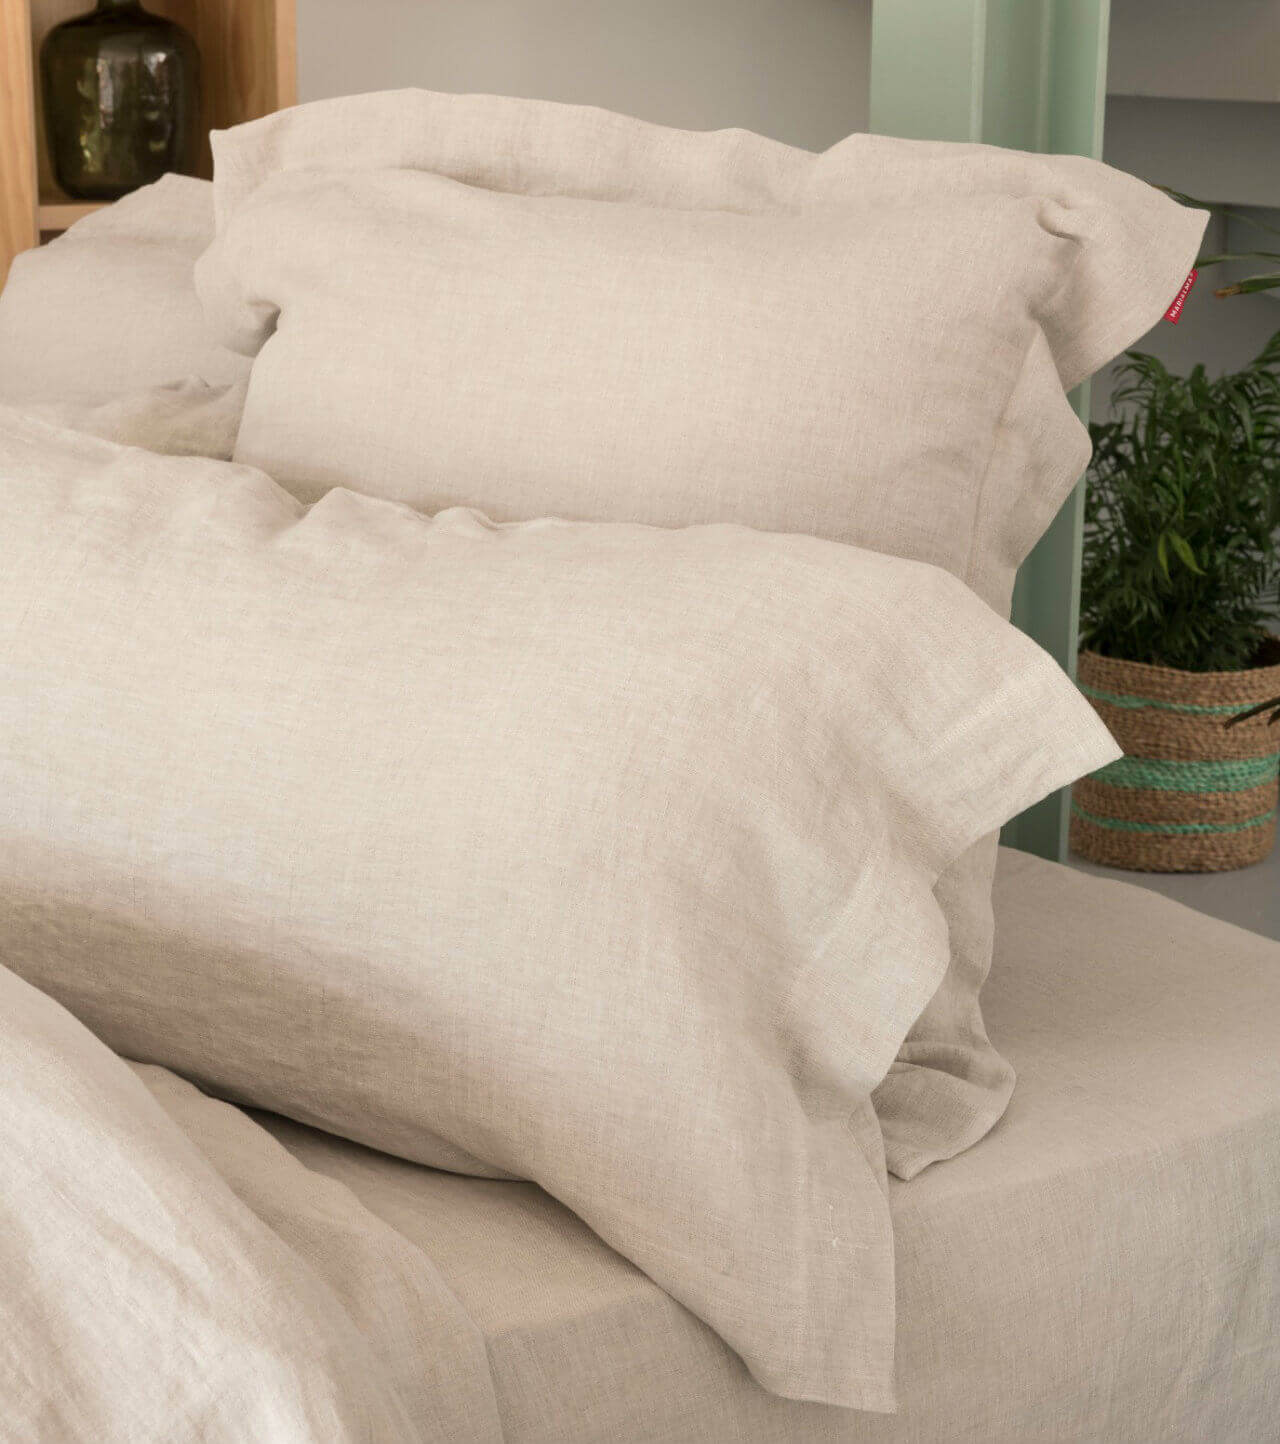 hemp bed sheets and pillows from marialma